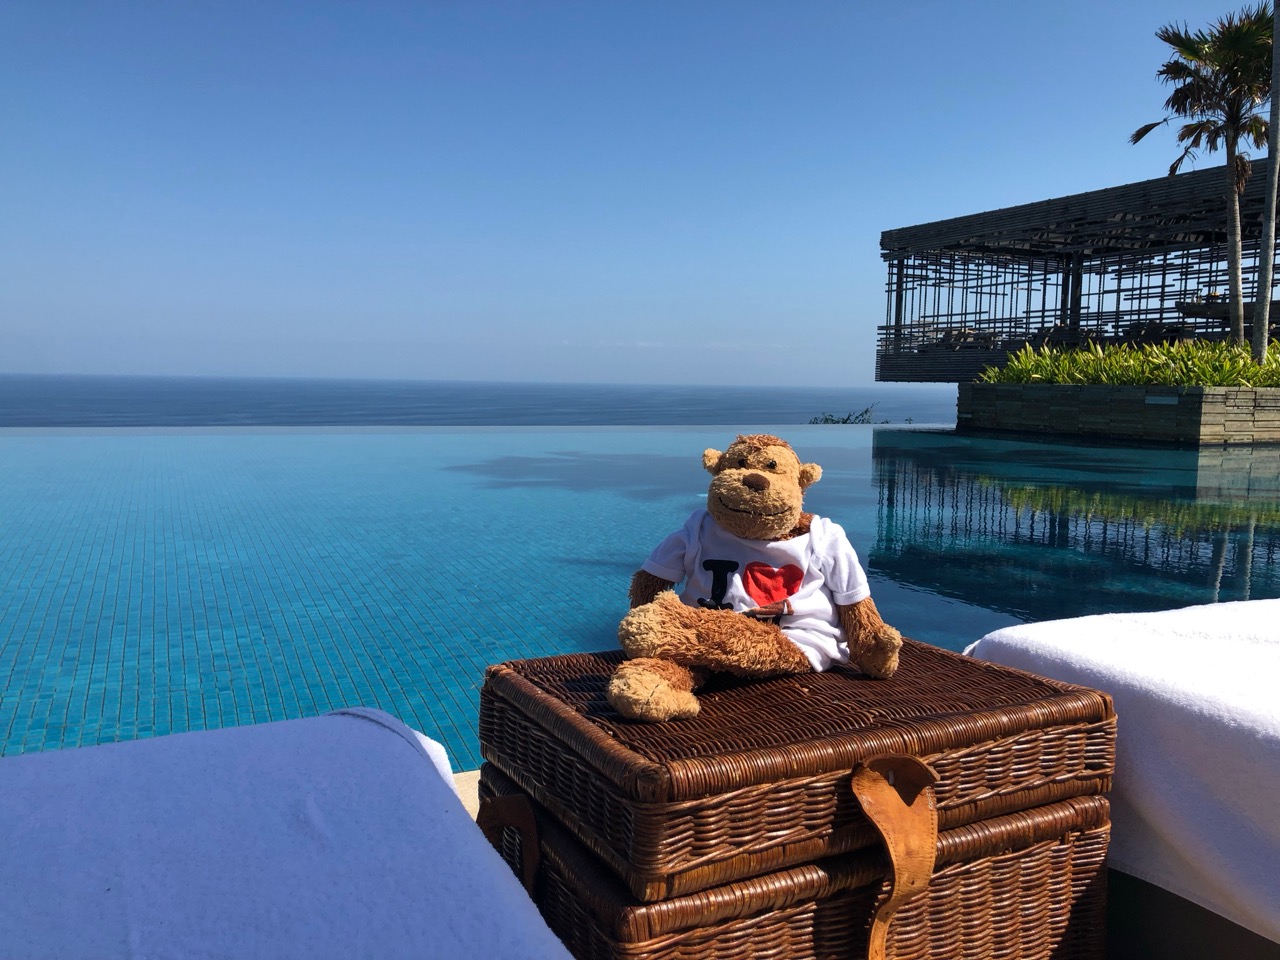 a teddy bear on a wicker basket next to a pool